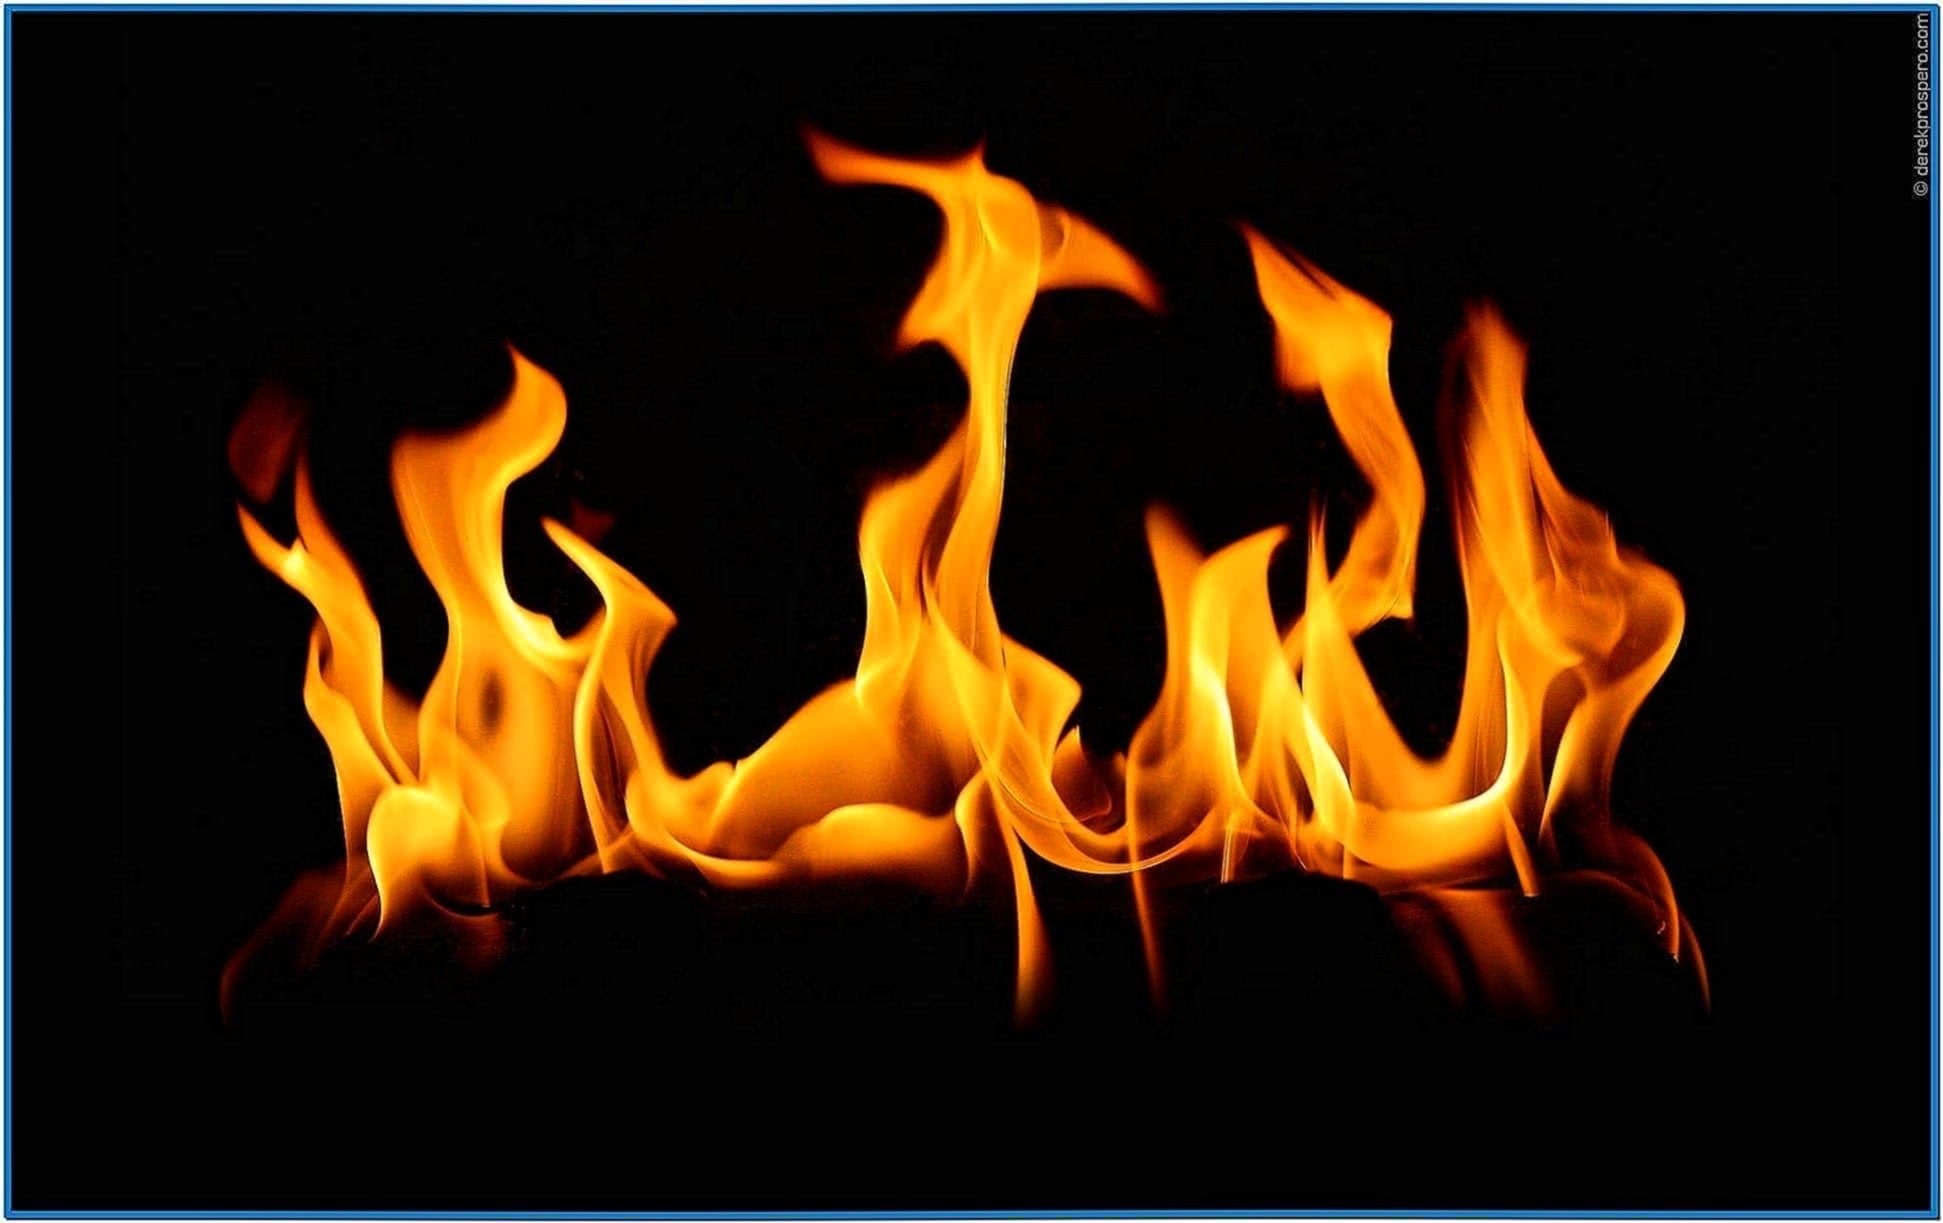 Fire screensaver flames - Download free